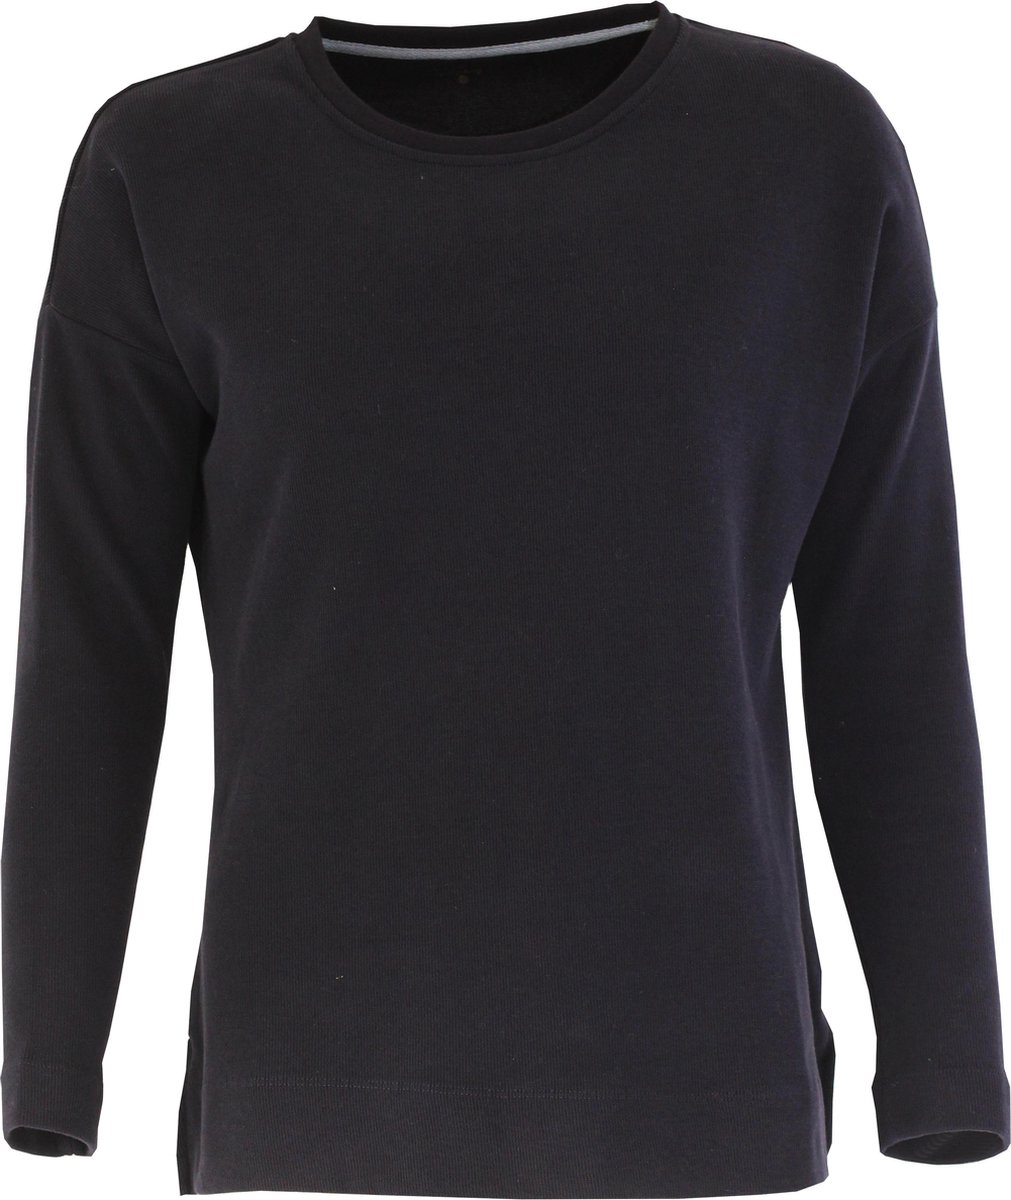 MOOI! Company - Dames sweater - Comfortabele Trui - Manon losvallend model - Kleur Navy - XL